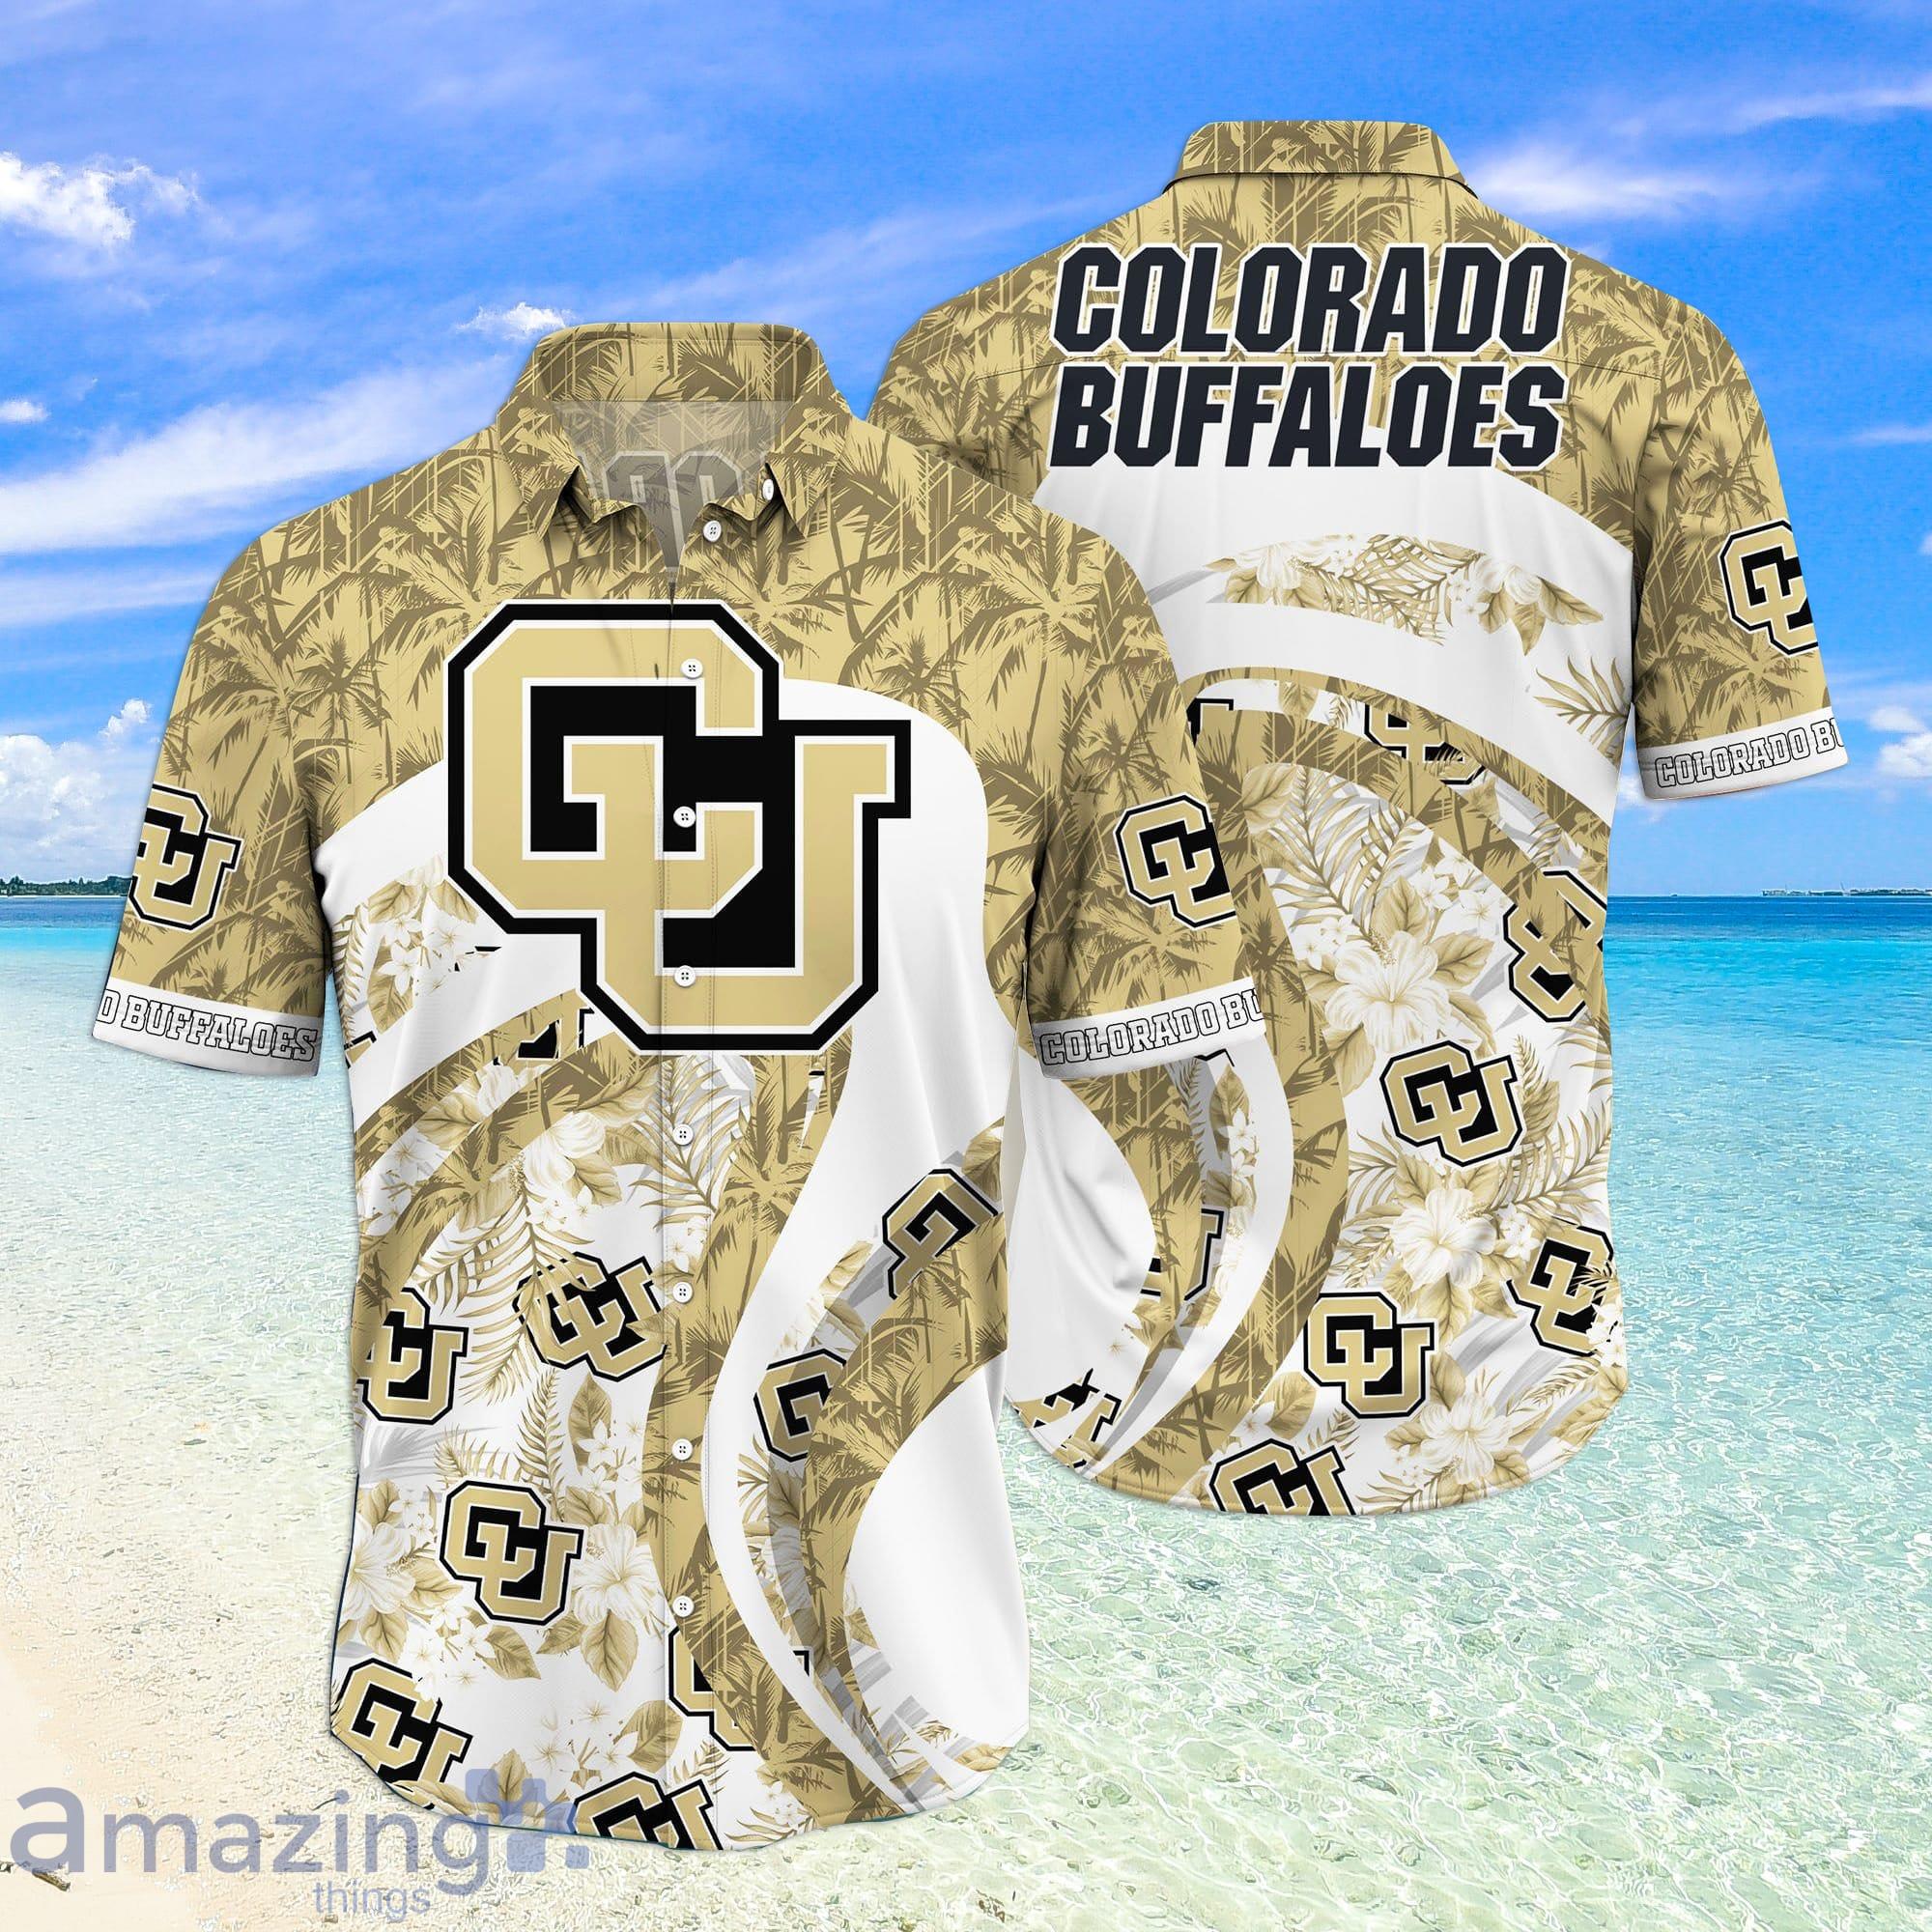 Colorado Buffaloes NCAA Jerseys for sale